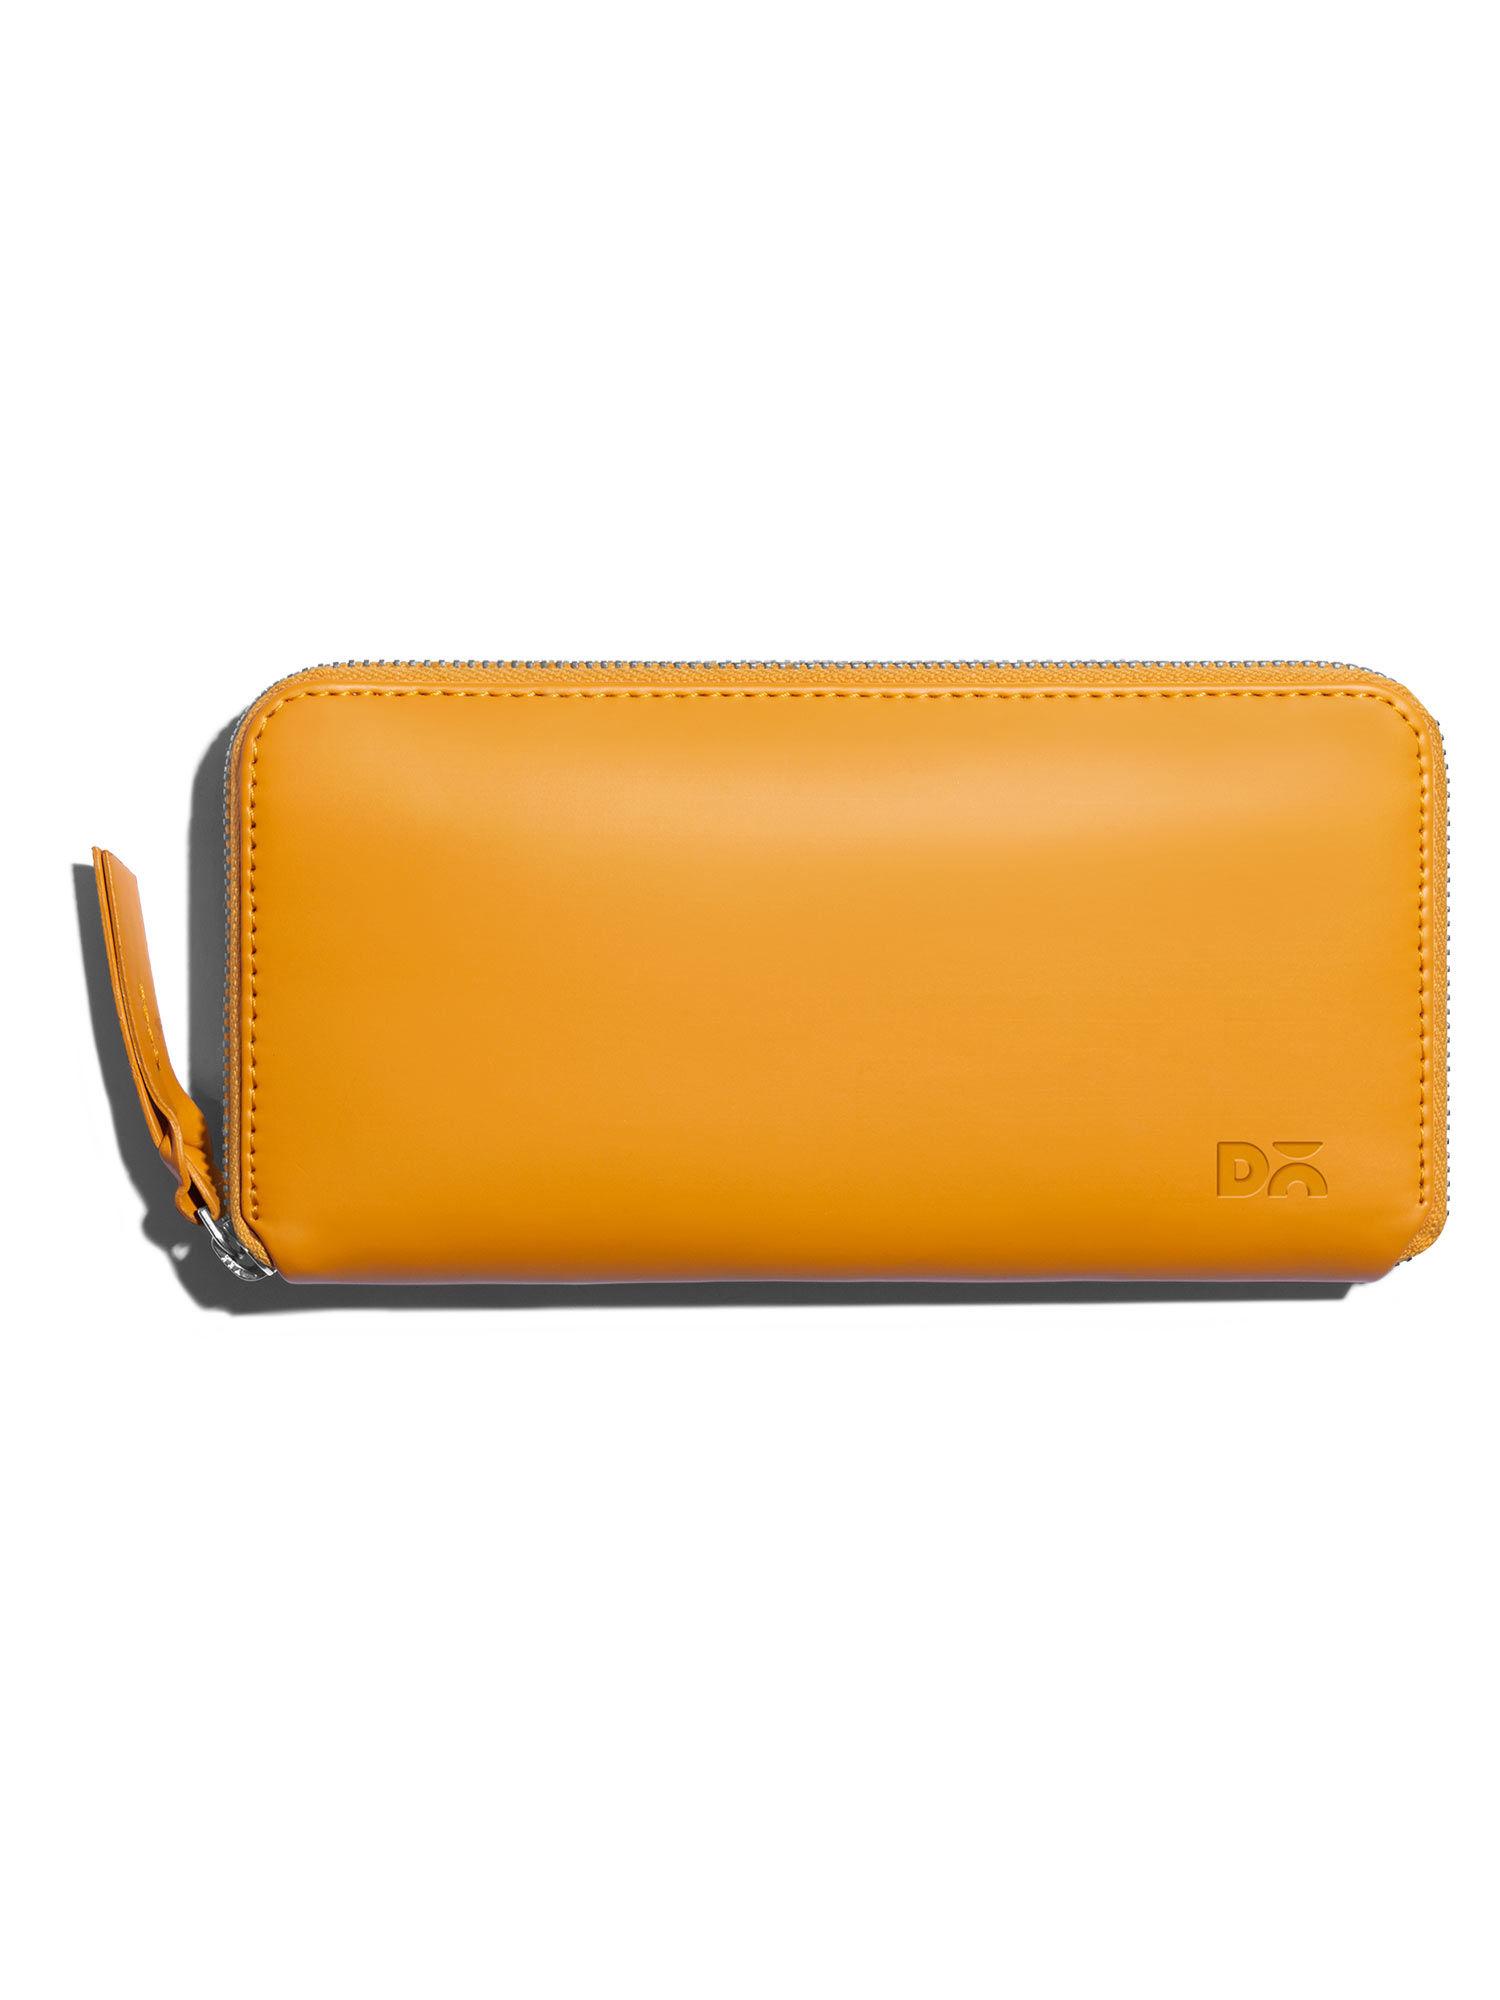 chrome yellow vegan leather women's classic wallet